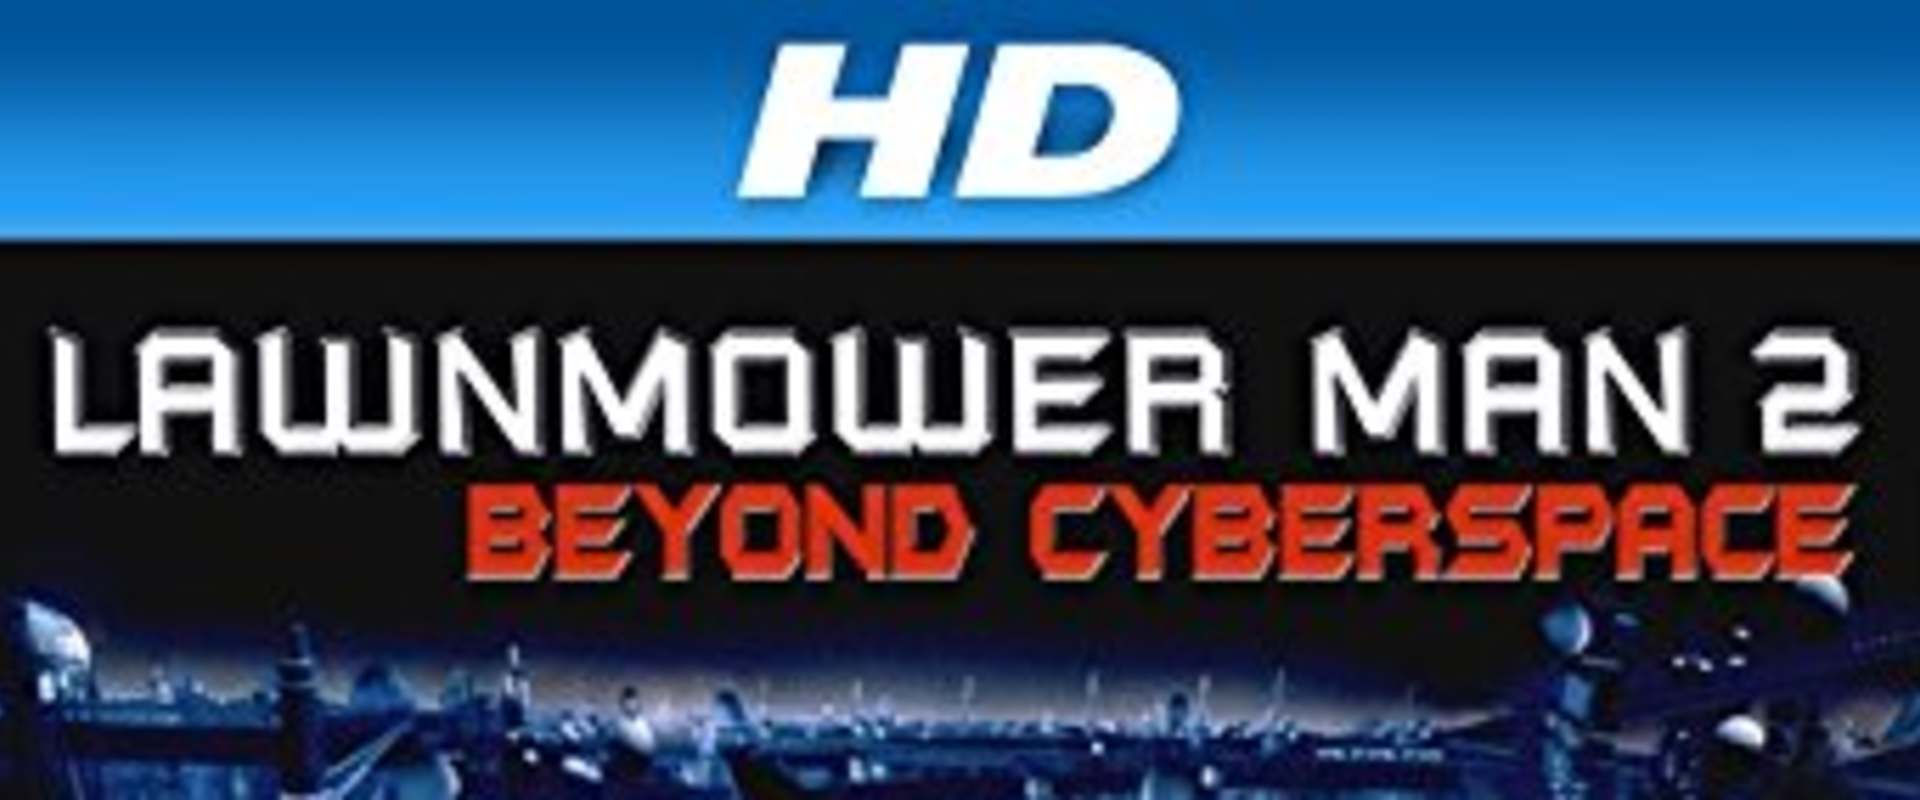 Lawnmower Man 2: Beyond Cyberspace background 2